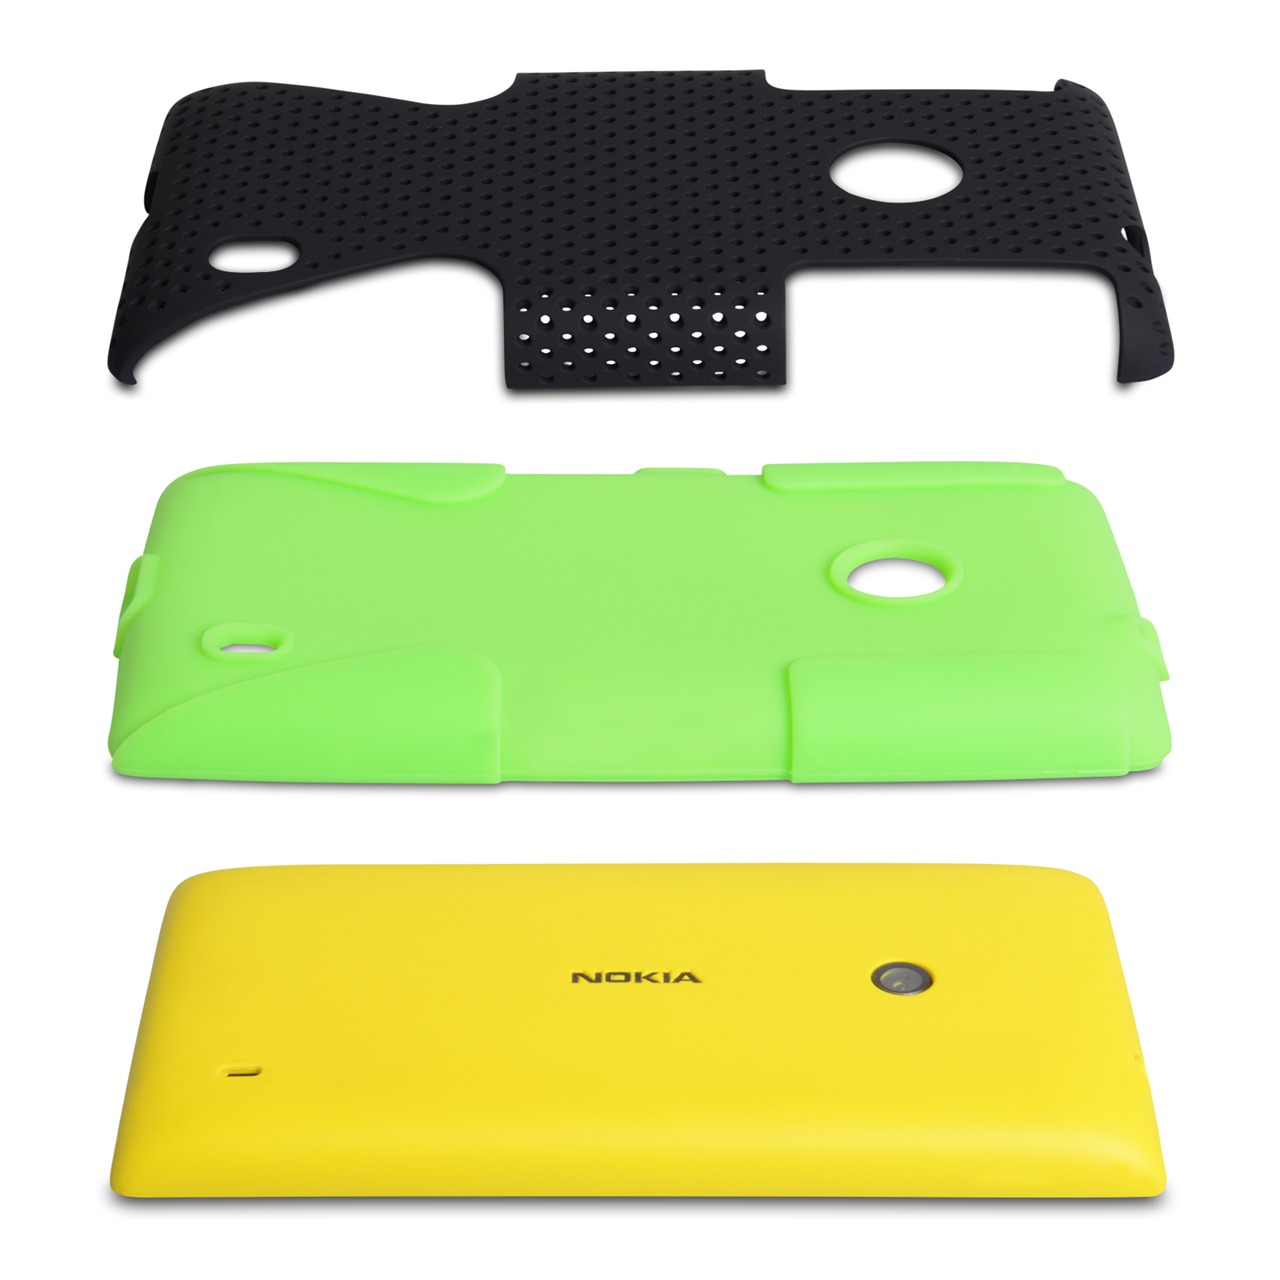 YouSave Accessories Nokia Lumia 520 Mesh Combo Case - Green